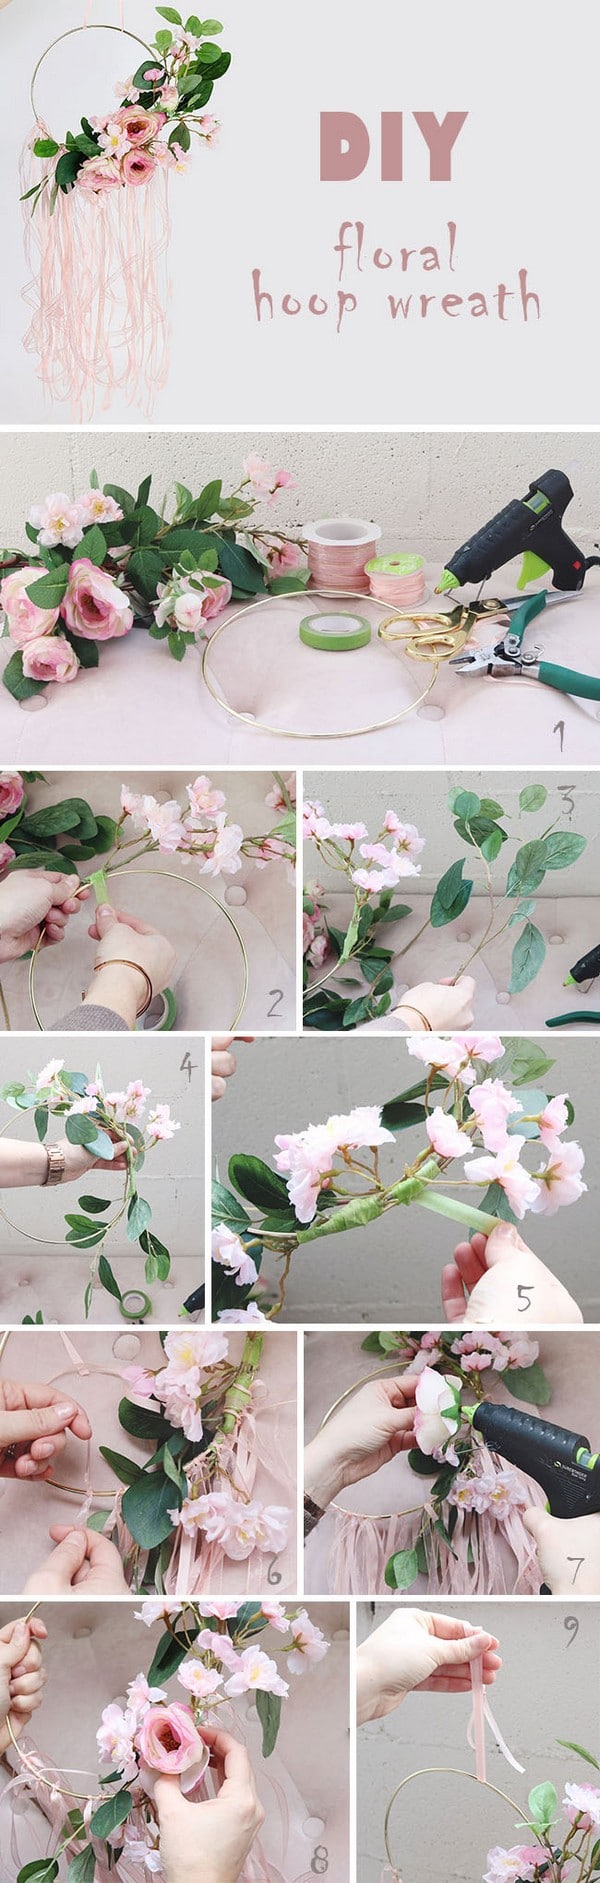 DIY boho style floral hoop wreath wedding decoration ideas